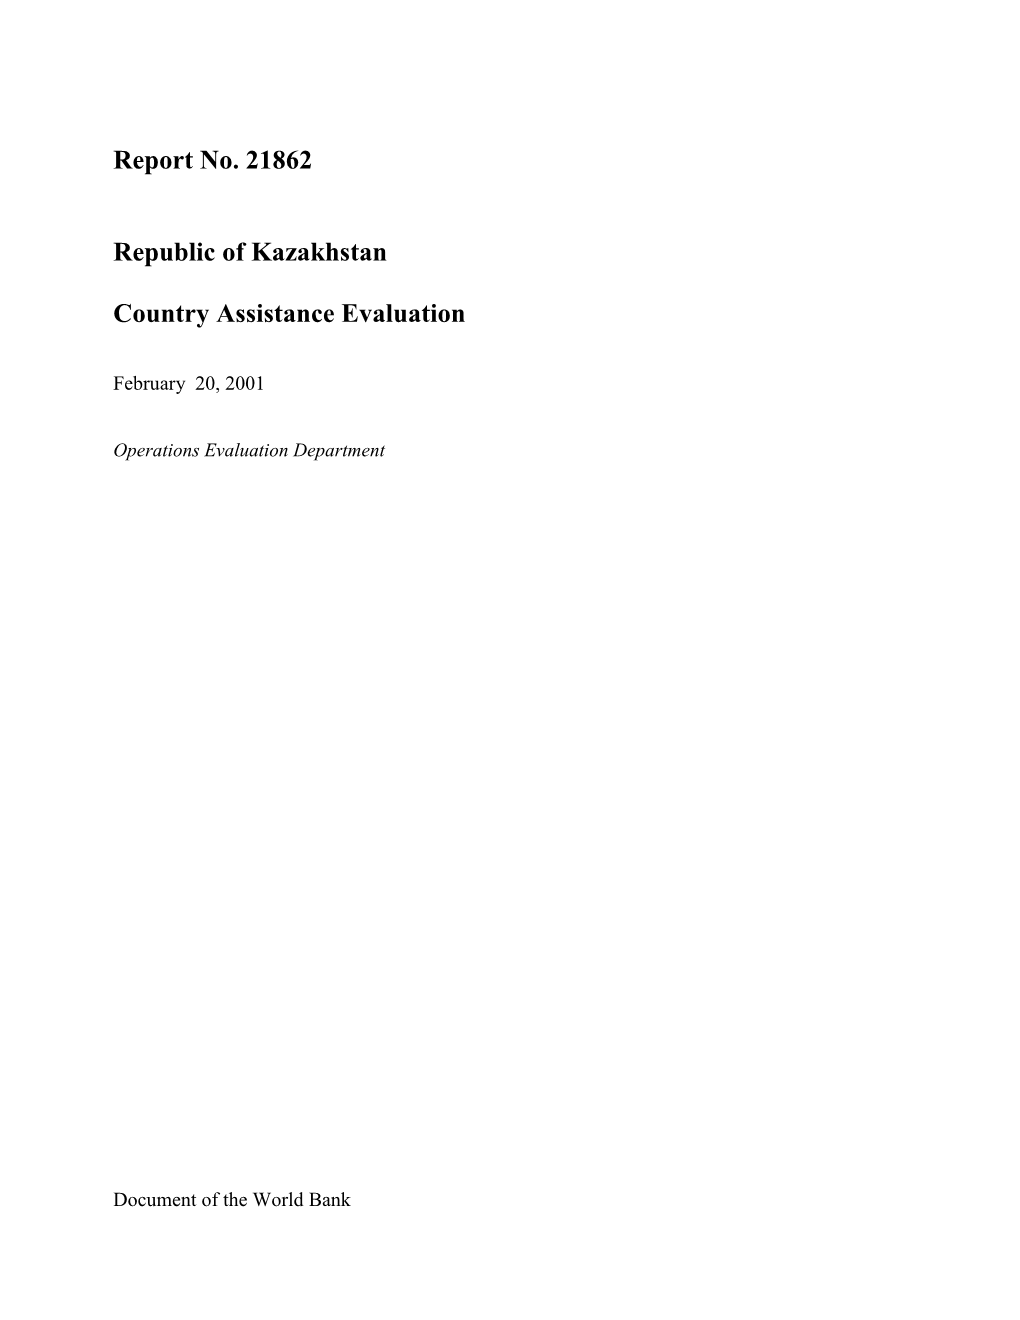 Report No. 21862 Republic of Kazakhstan Country Assistance